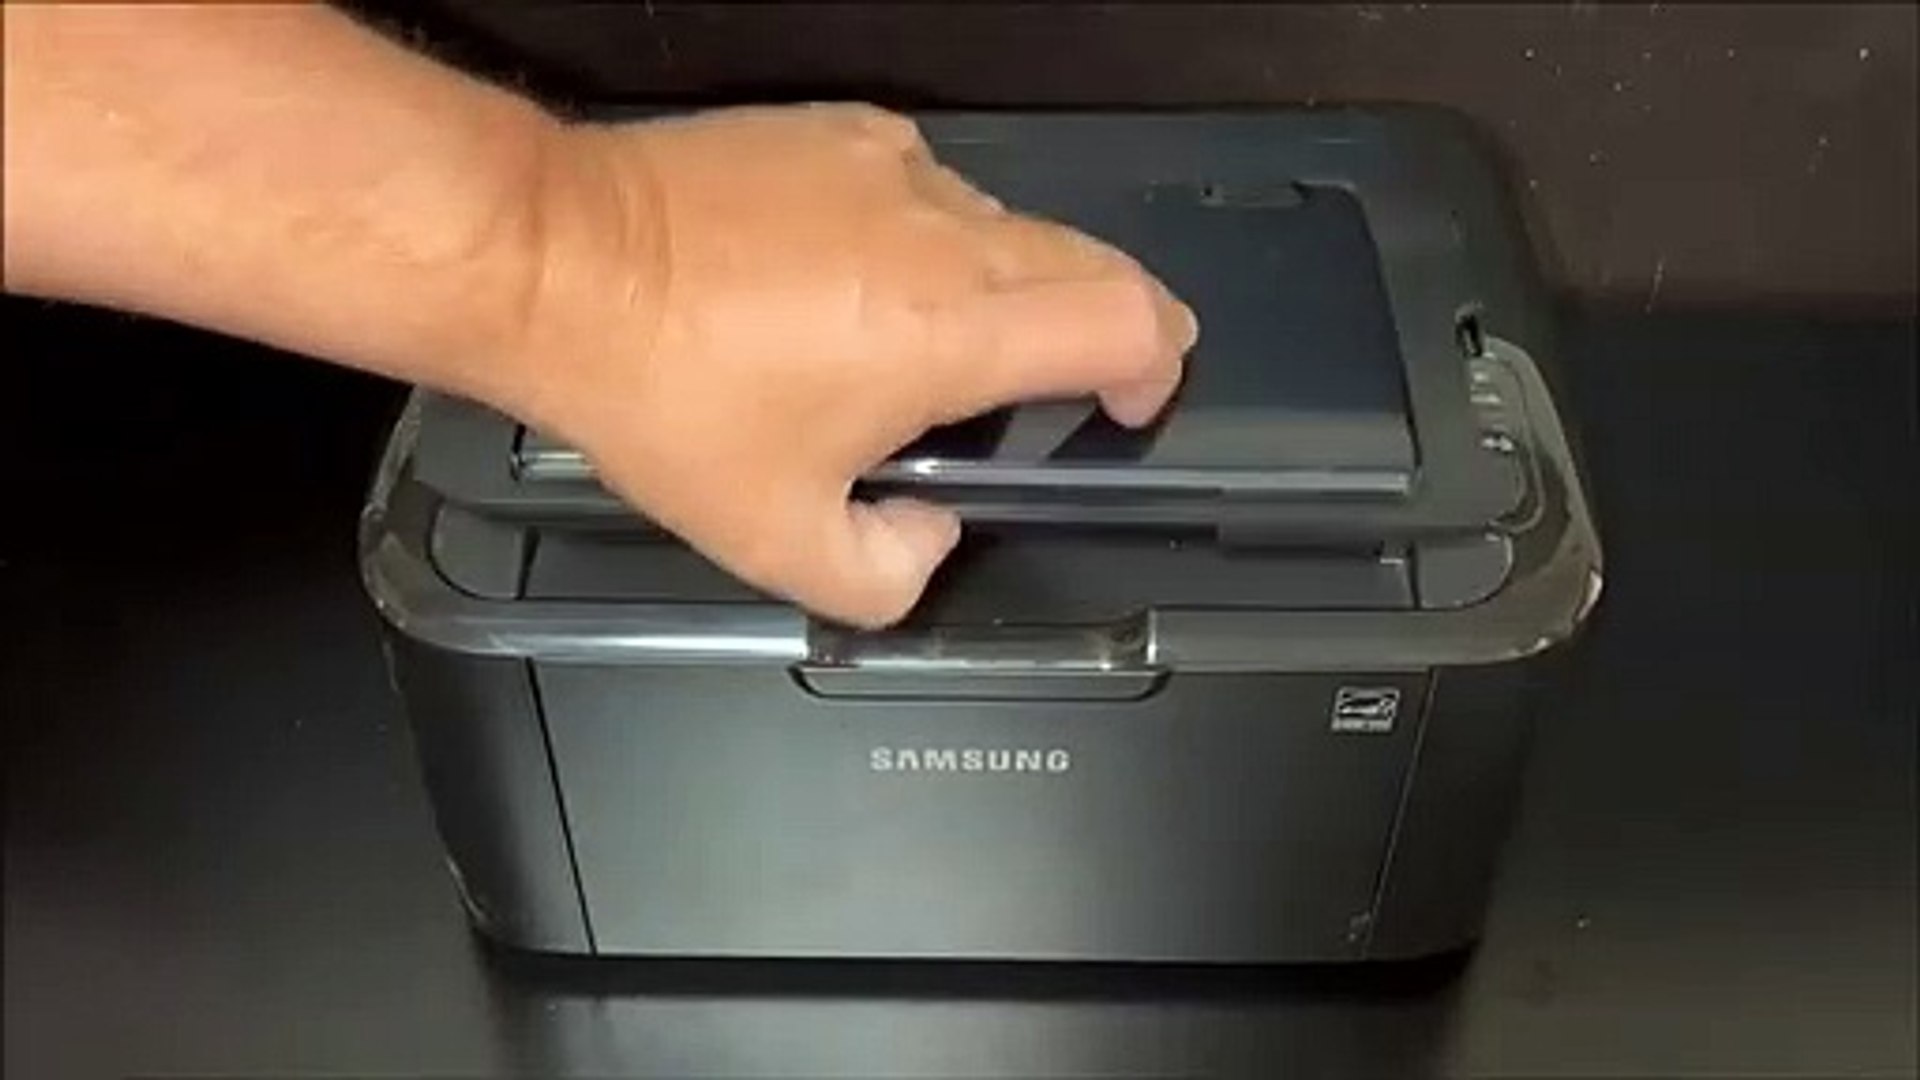 Samsung ML 1665 Toner Cartridge Replacement - video Dailymotion